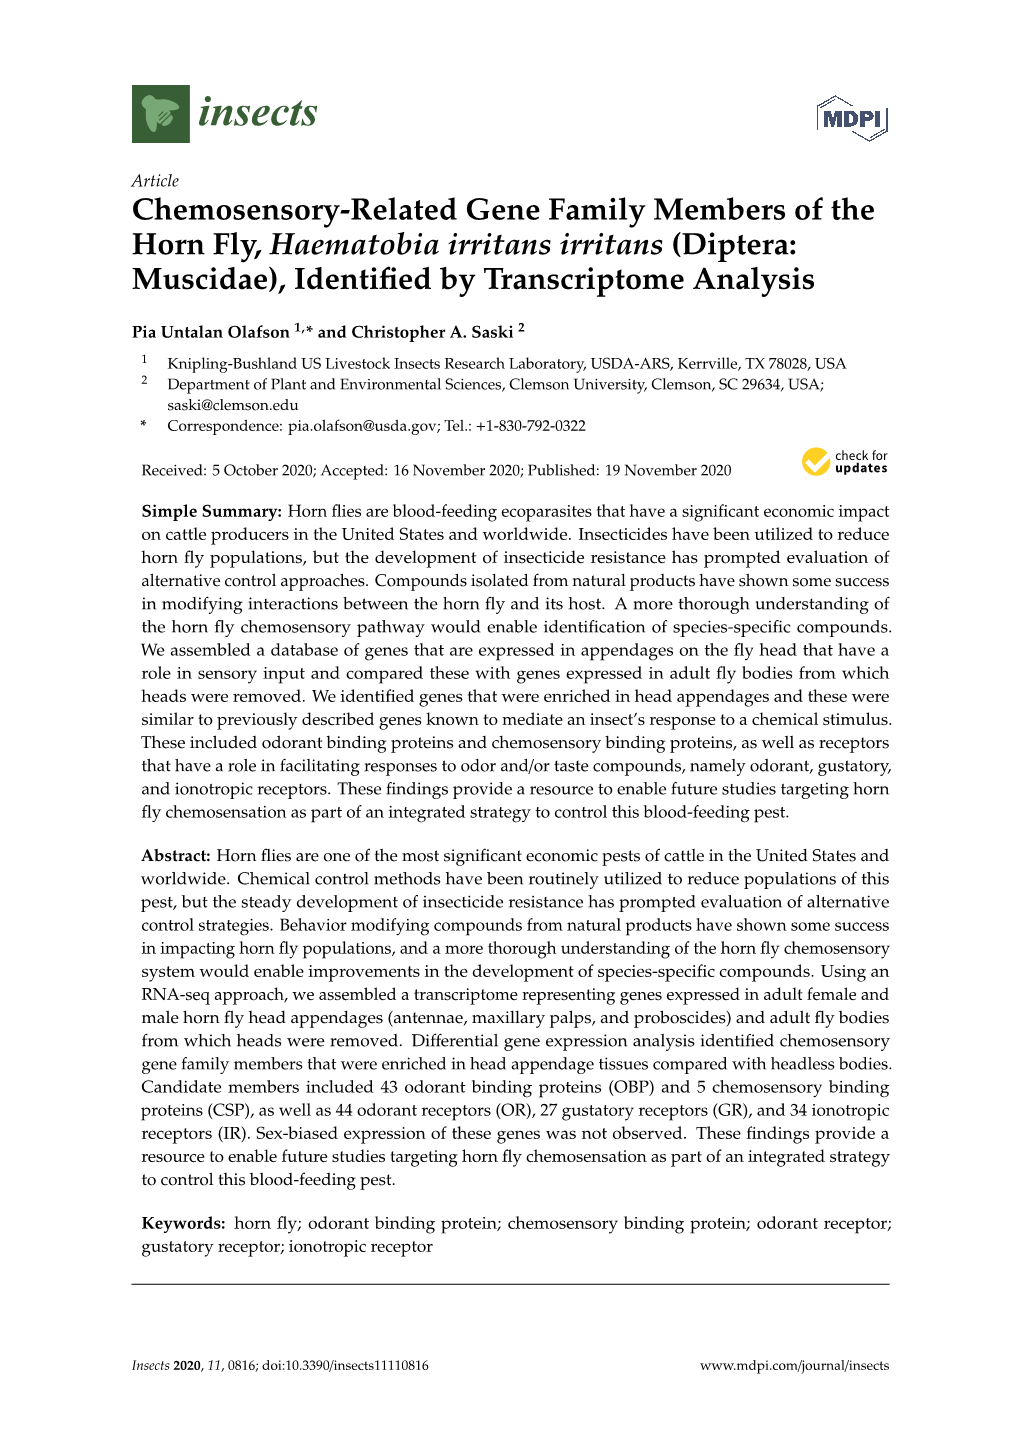 Chemosensory-Related Gene Family Members of the Horn Fly, Haematobia Irritans Irritans (Diptera: Muscidae), Identiﬁed by Transcriptome Analysis